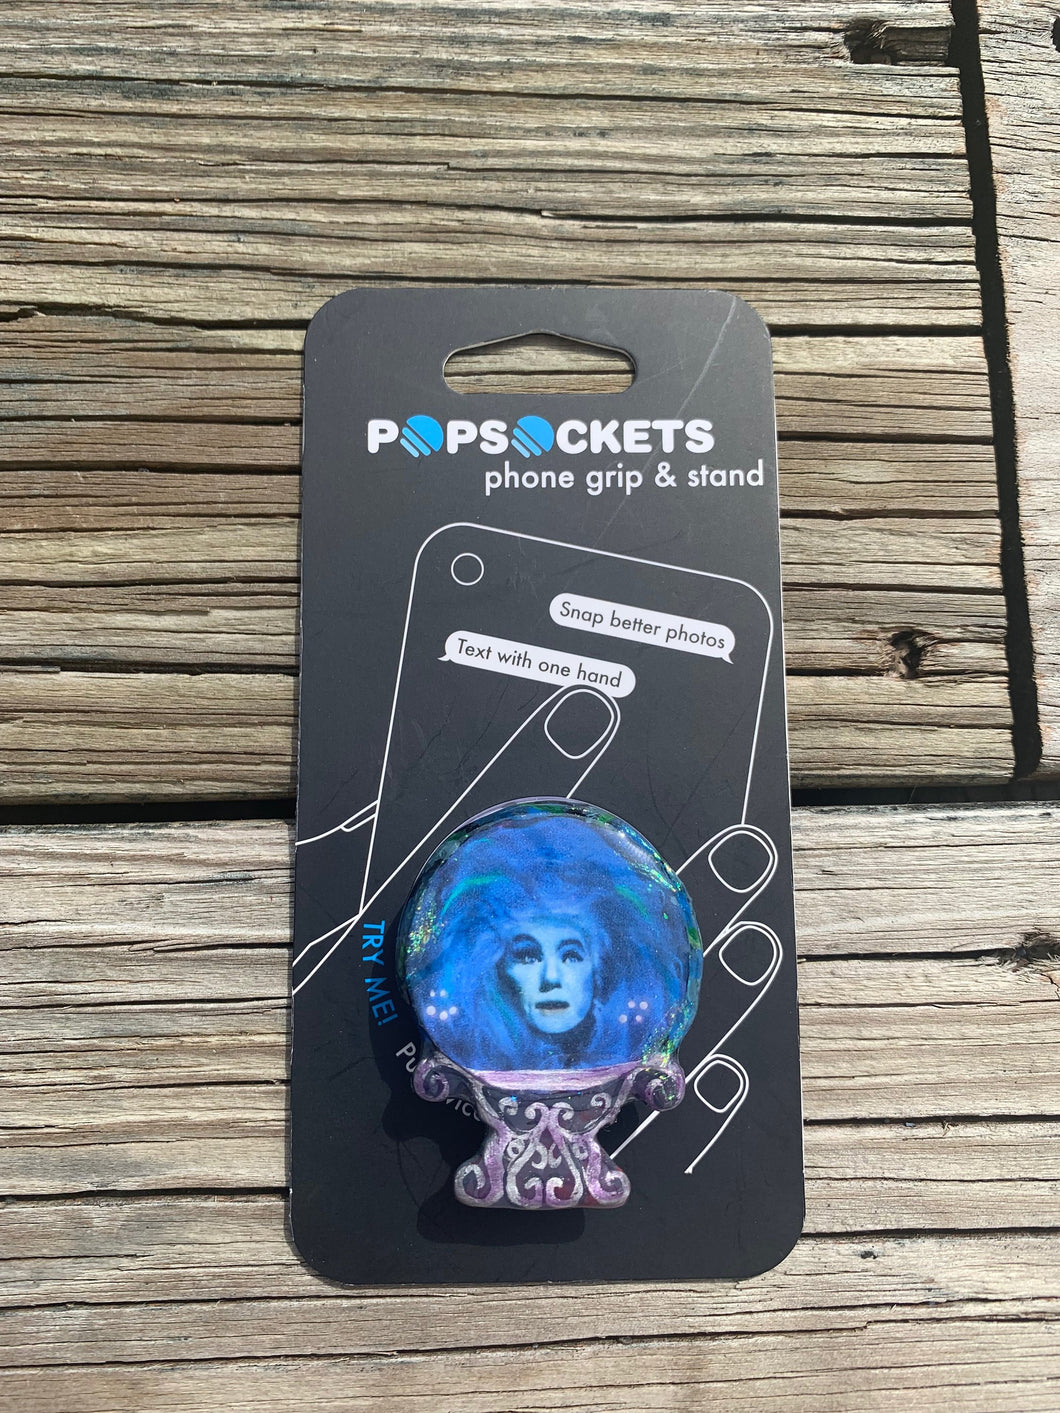 Glow/UV Crystal Ball Leota Inspired Pop Grip/ Popsocket